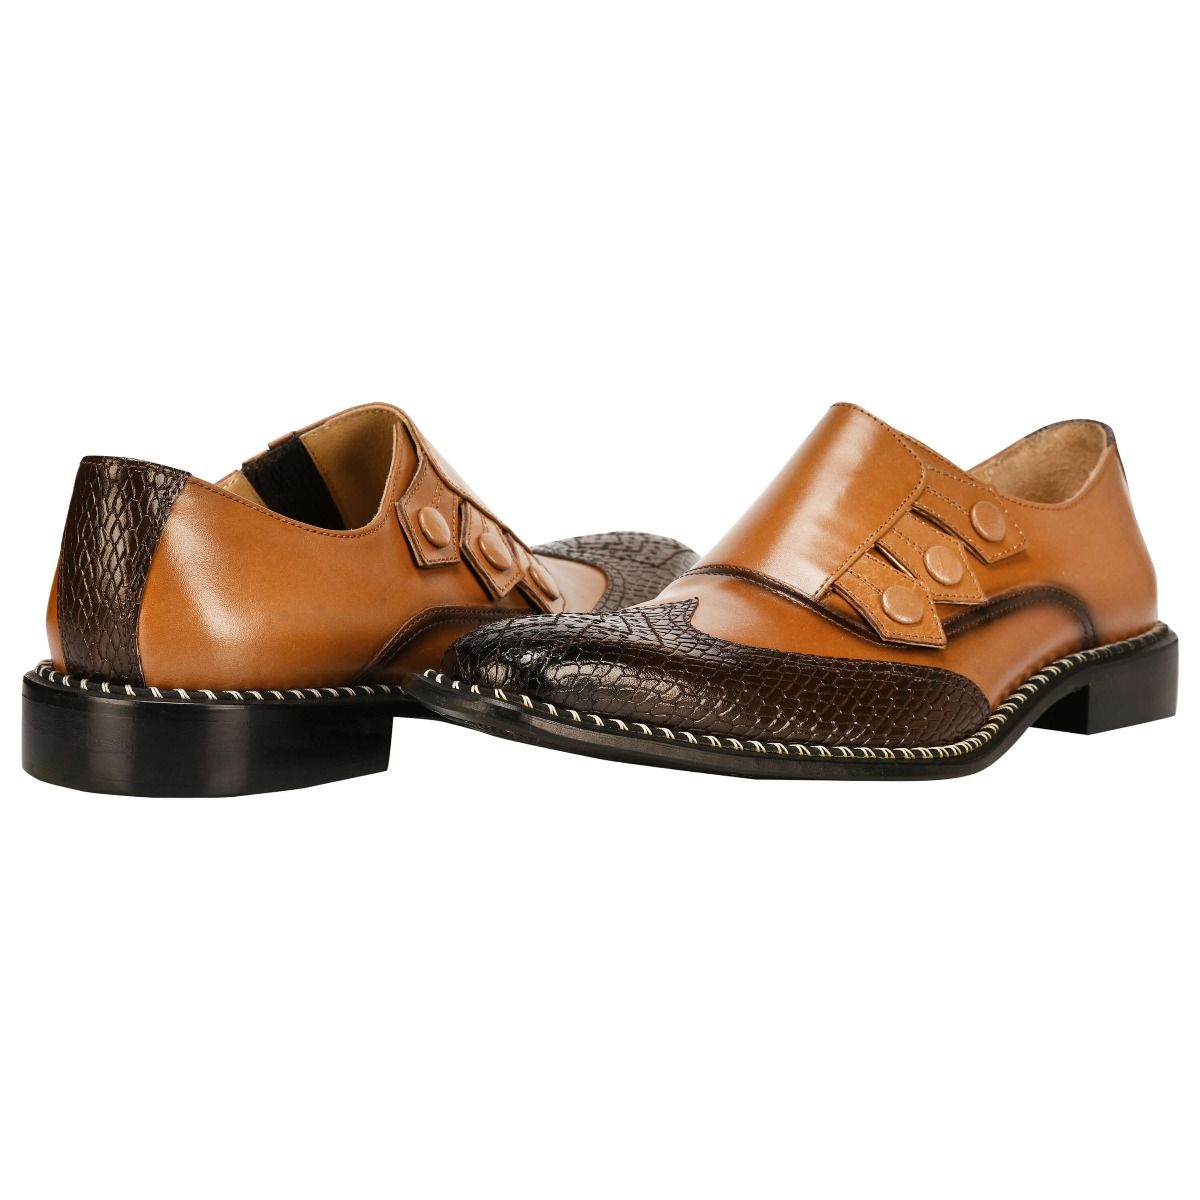 LIBERTYZENO Triple Monk Strap Slip-on Mens Leather Formal Wingtip Brogue Dress Shoes - image 2 of 5